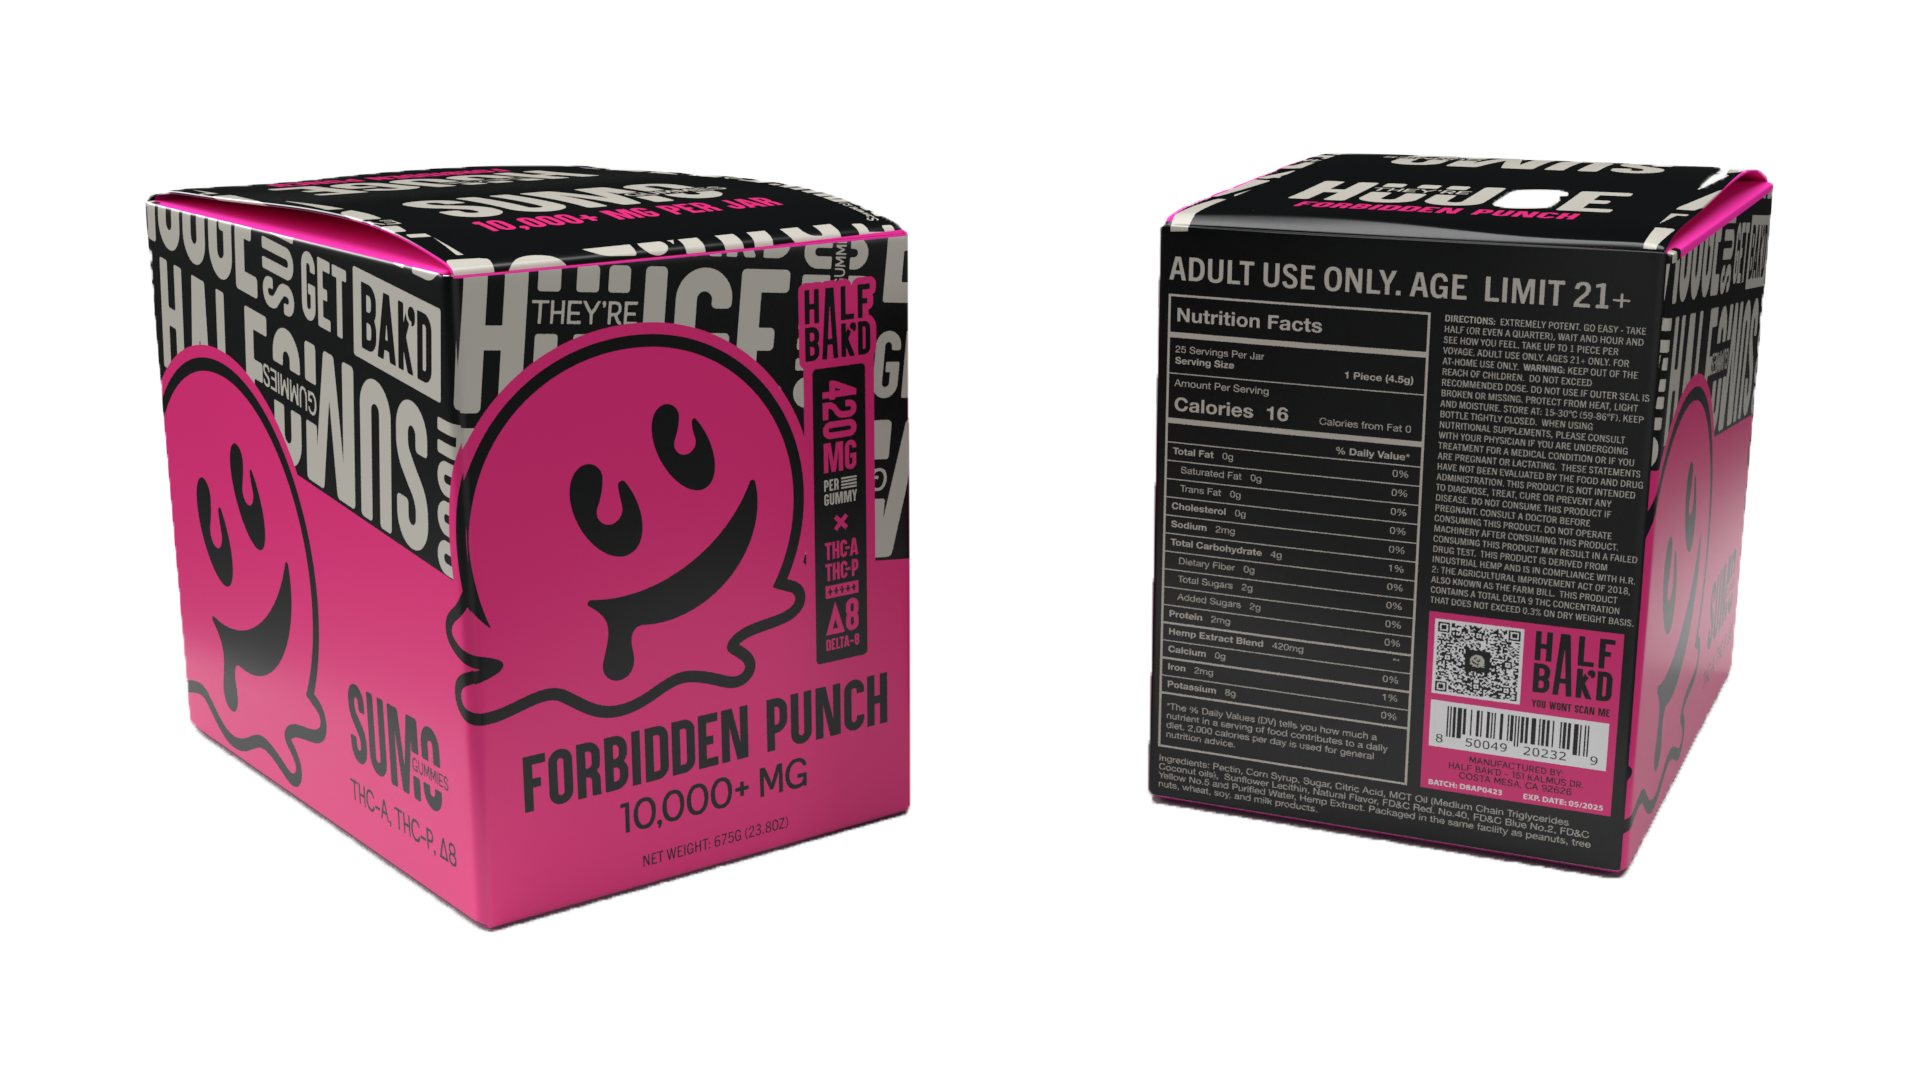 Forbidden Punch 10,000+ MG PER JAR- Sumo Gummies